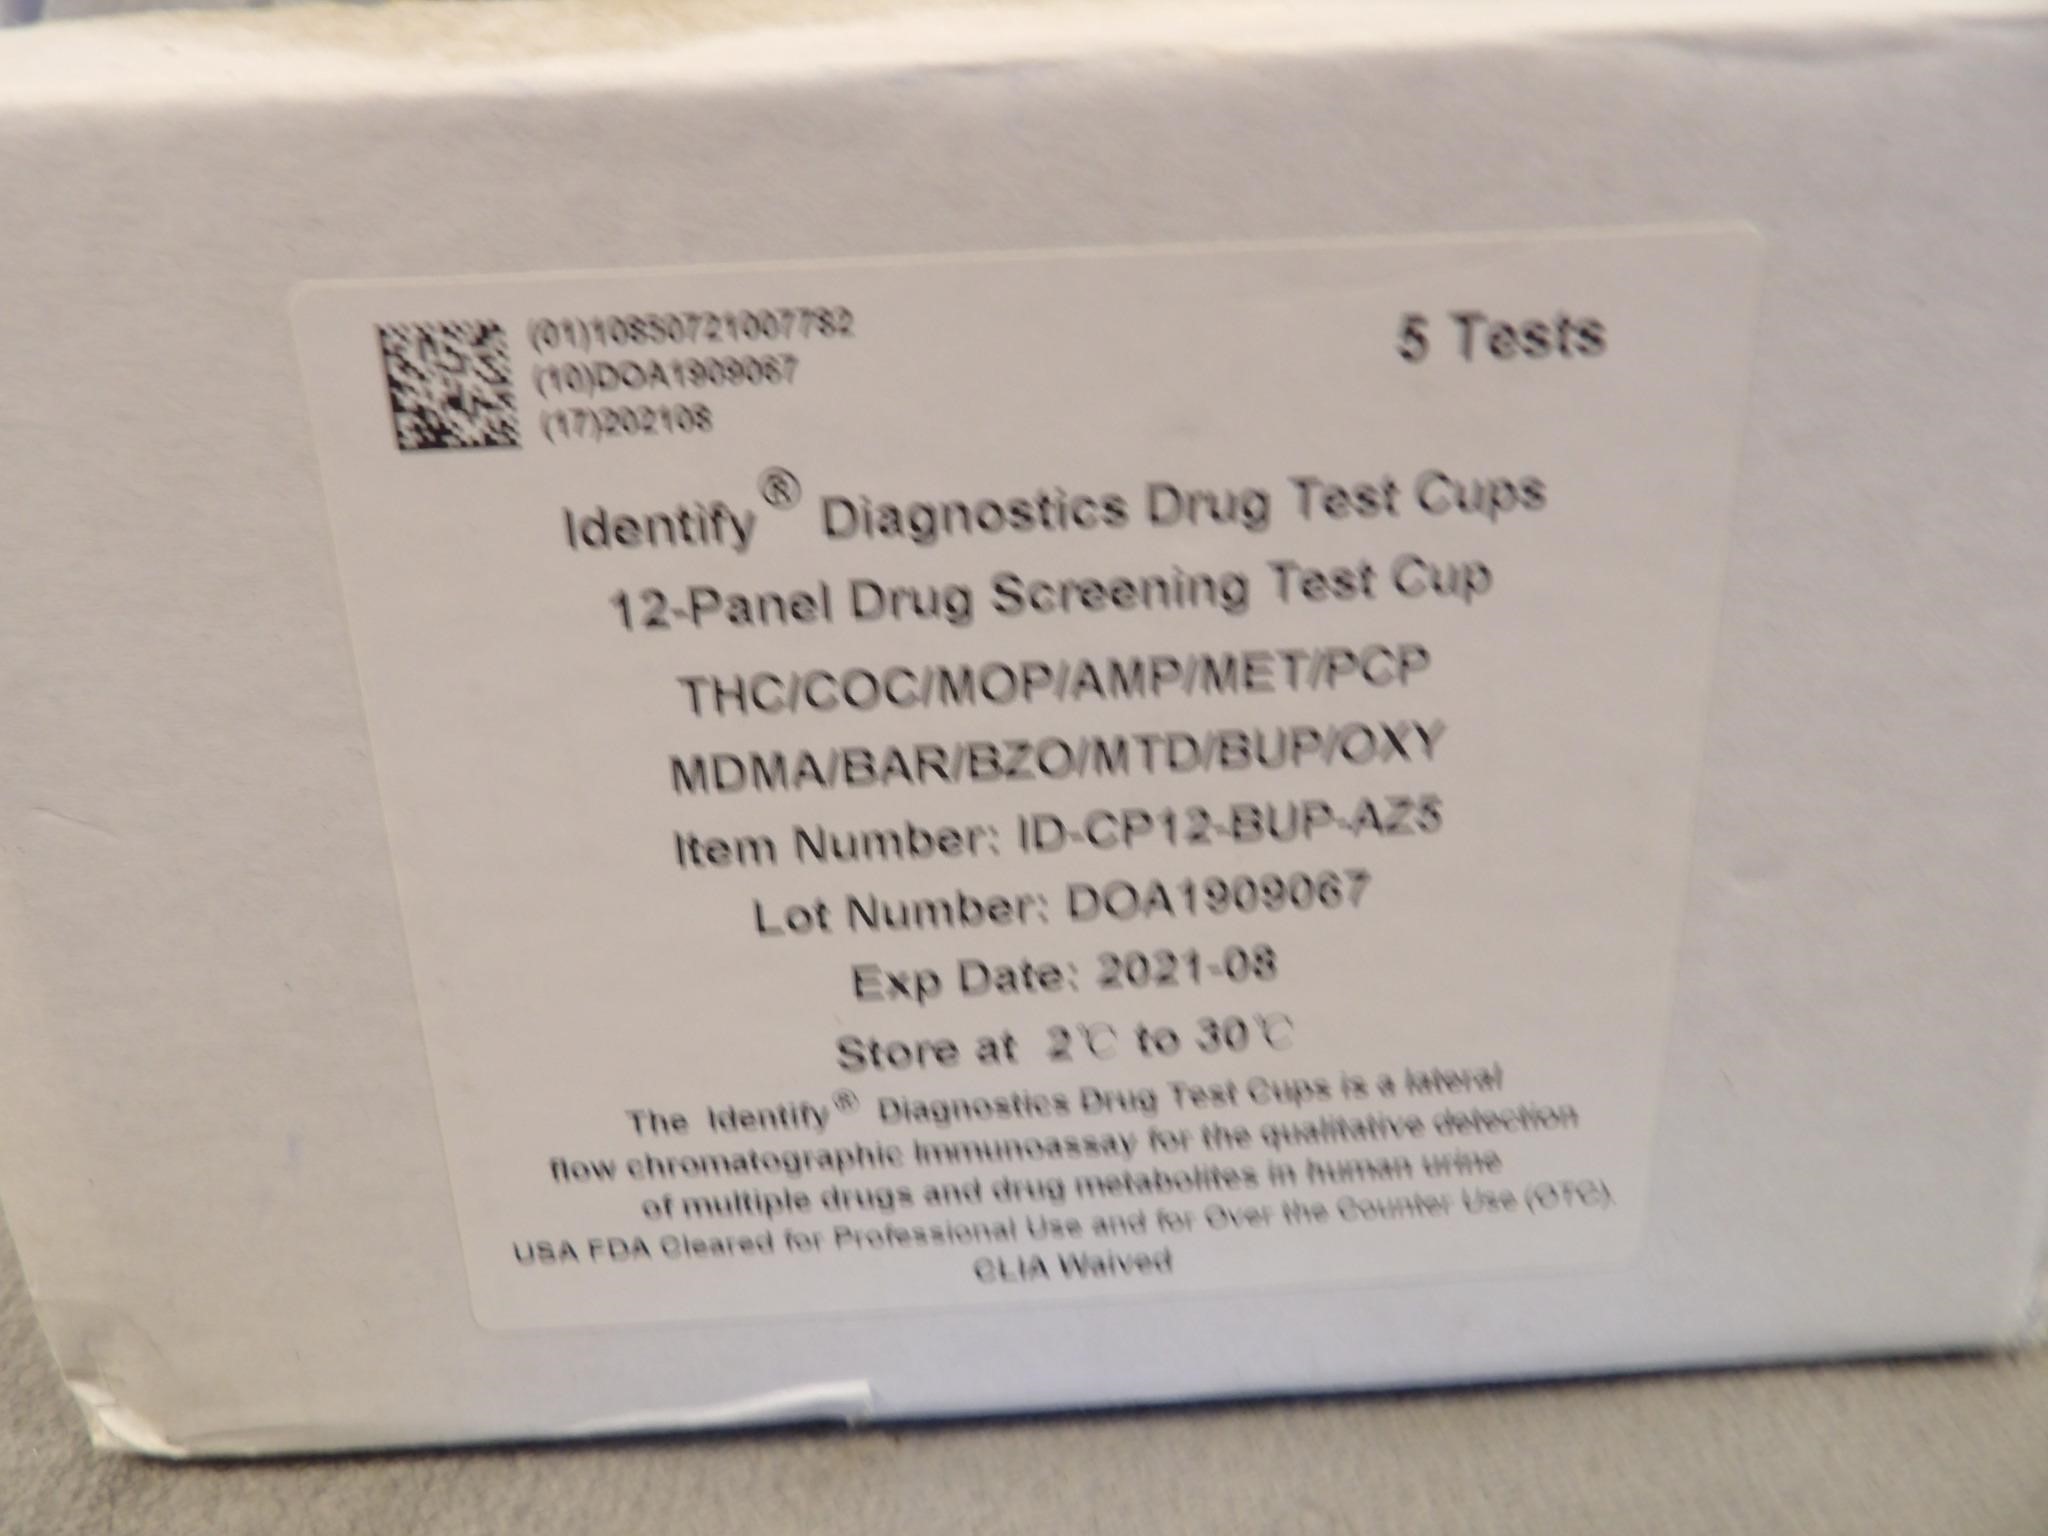 Five Identify Diagnostic Drug Test Cups